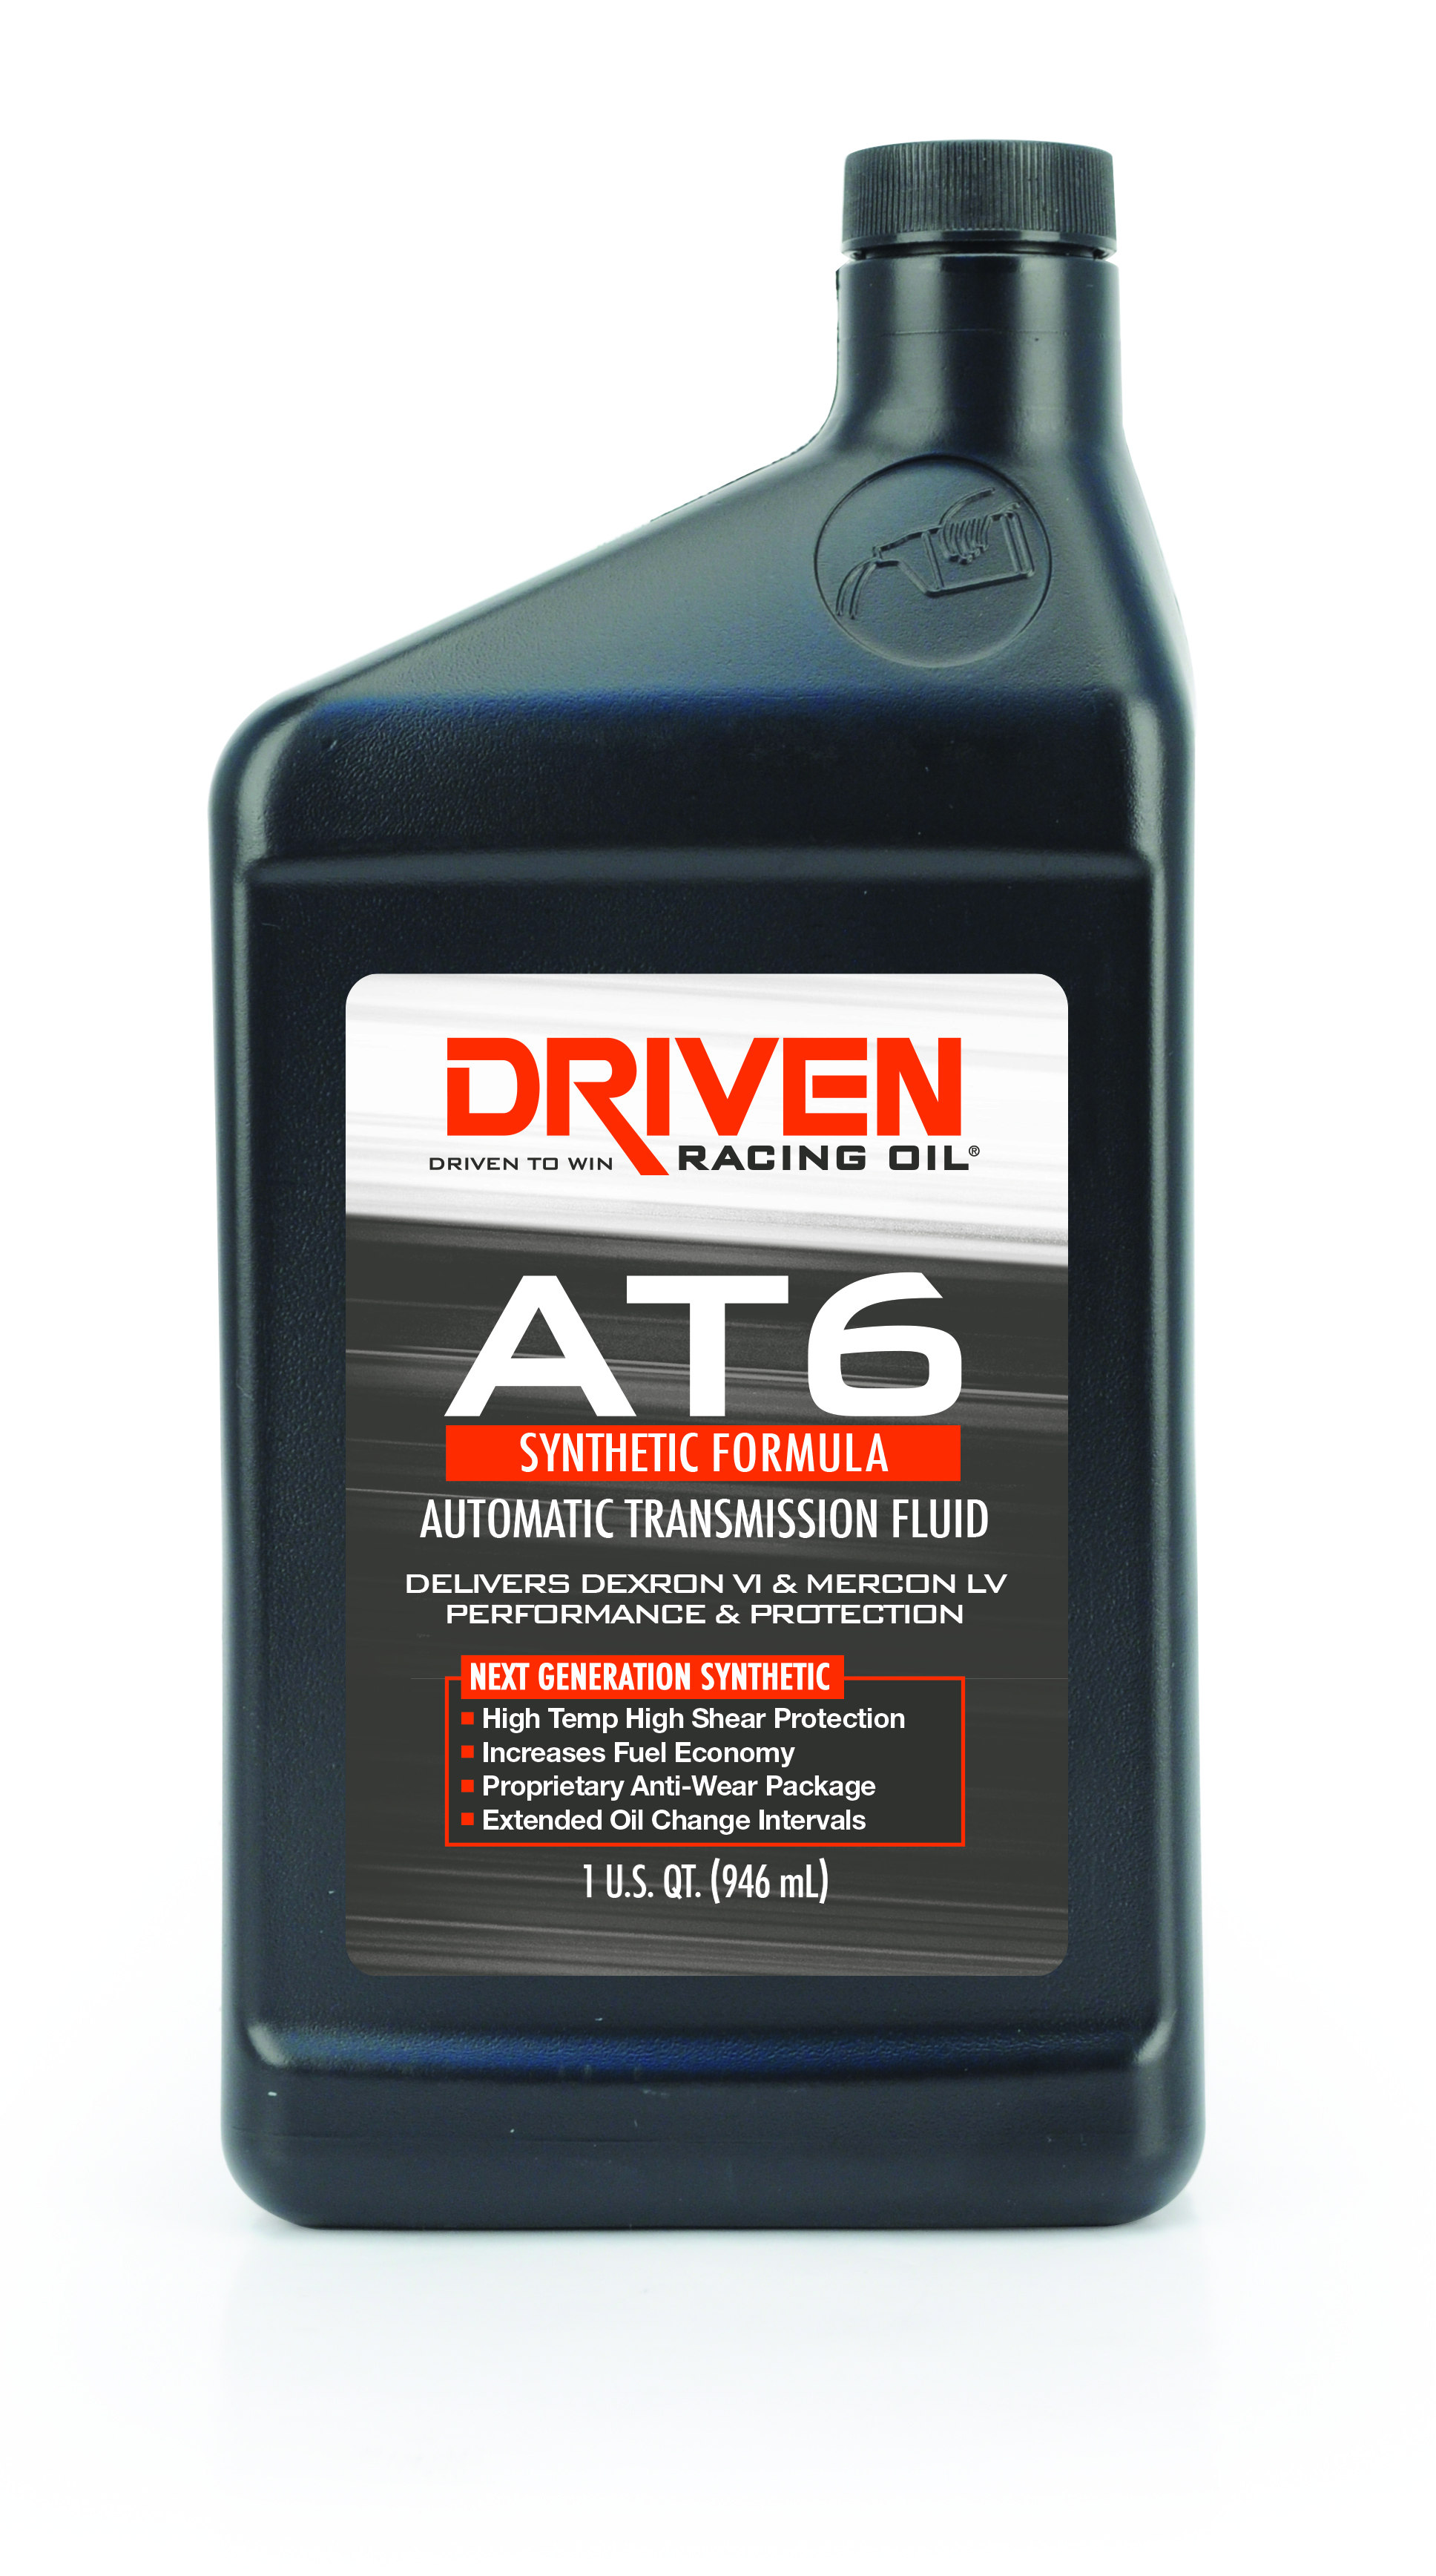 Driven Oil Transmission Fluid, AT6, Automatic, Synthetic, 1 qt Bottle, Each JGP04806